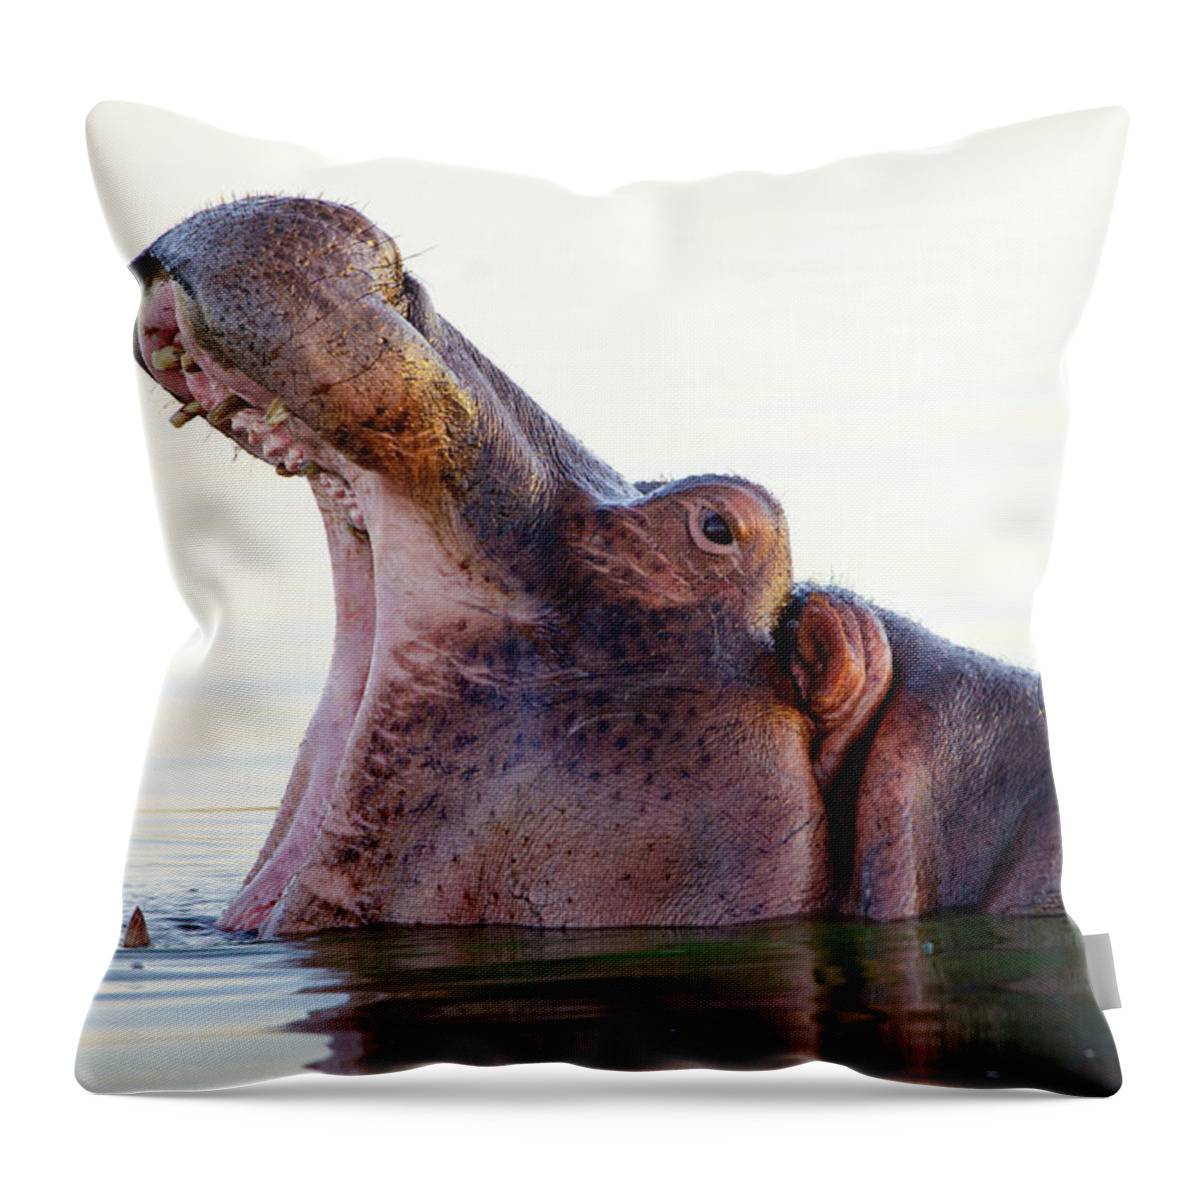 Hippopotamus Throw Pillow featuring the photograph Hippopotamus Yawning - South Africa by Birdimages